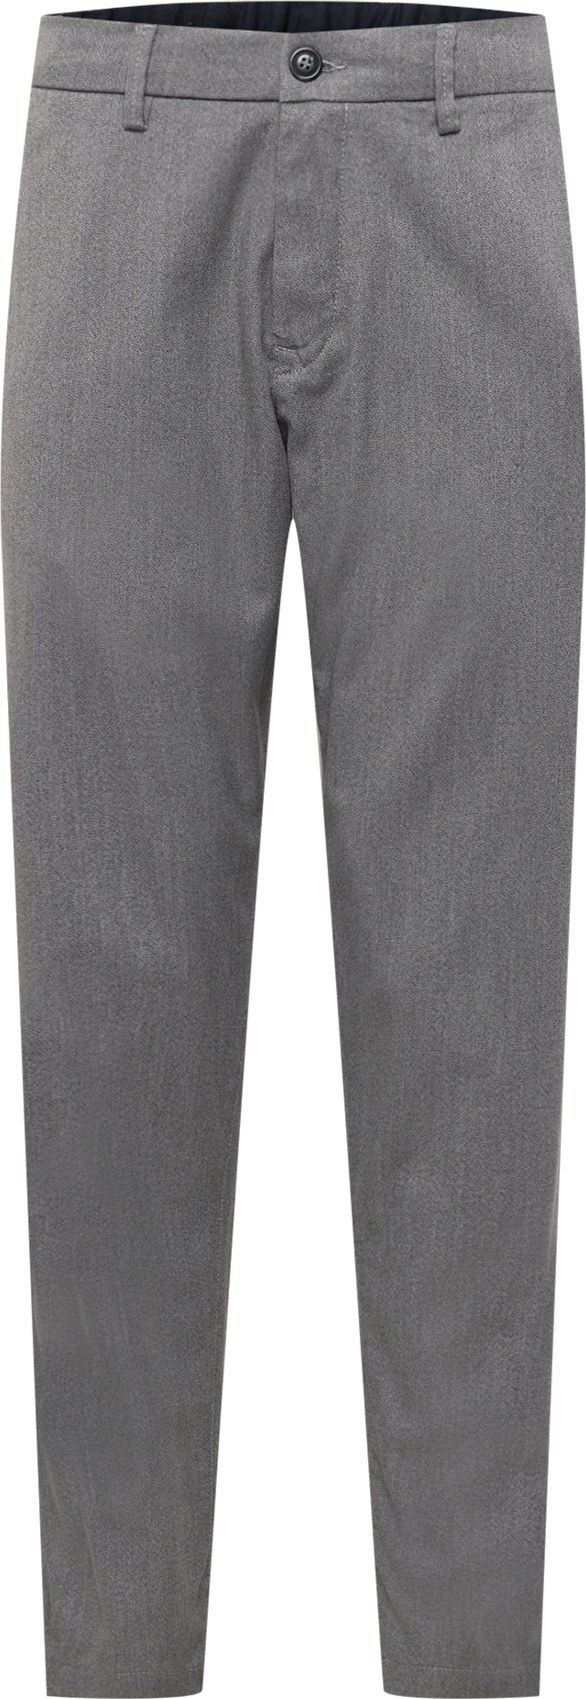 SELECTED HOMME Chino kalhoty 'York' šedý melír